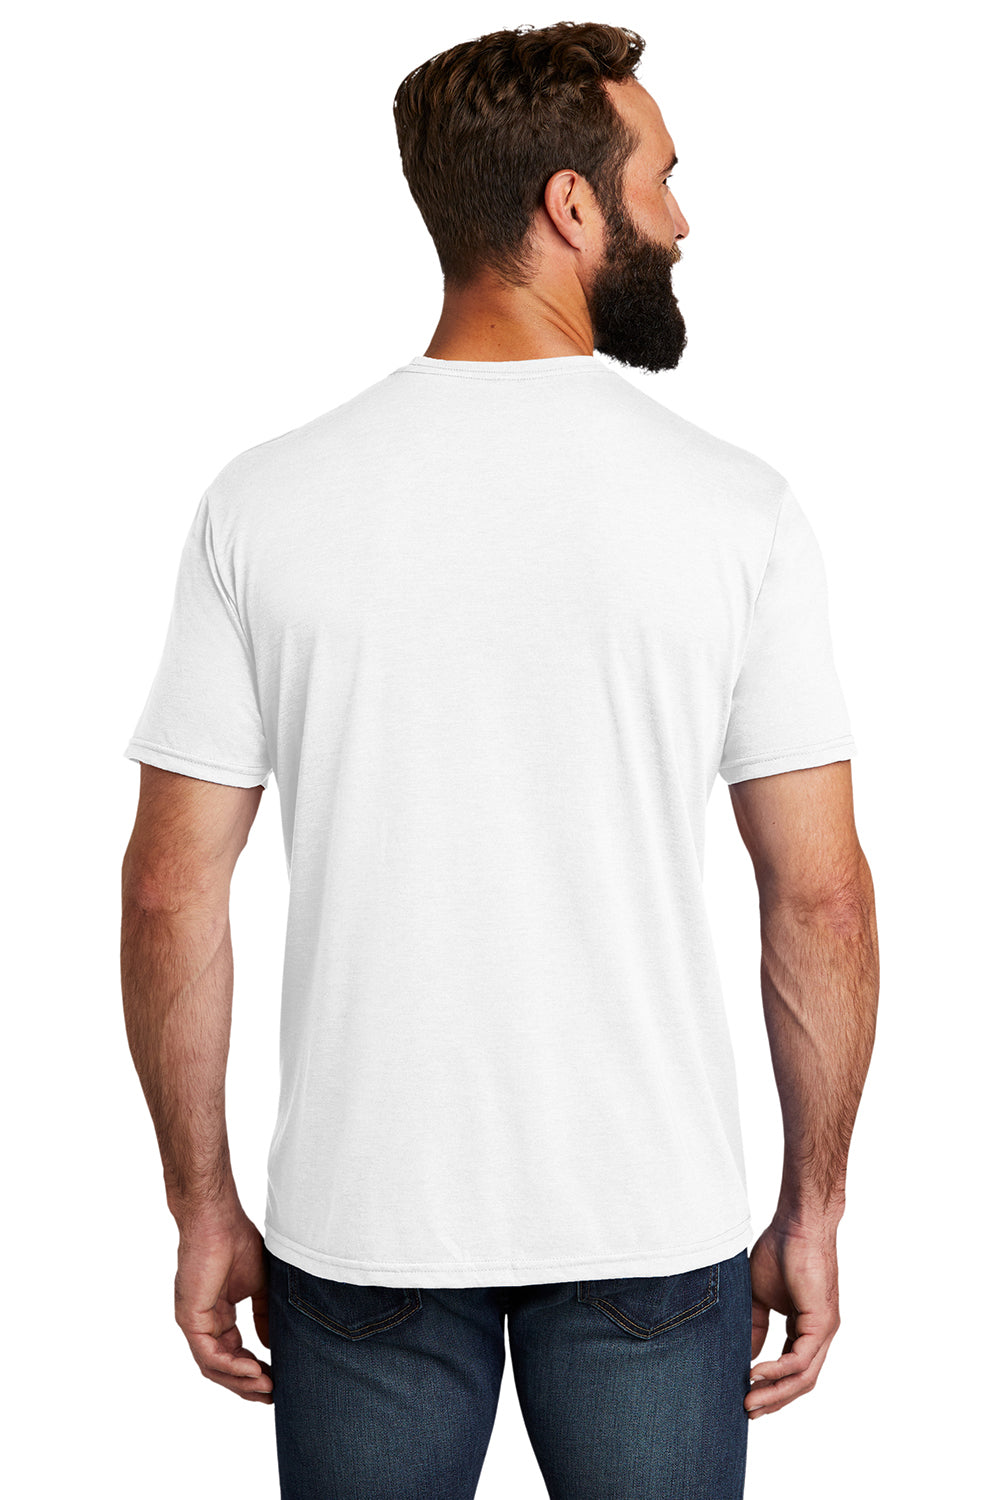 Allmade AL2004 Mens Short Sleeve Crewneck T-Shirt Bright White Model Back